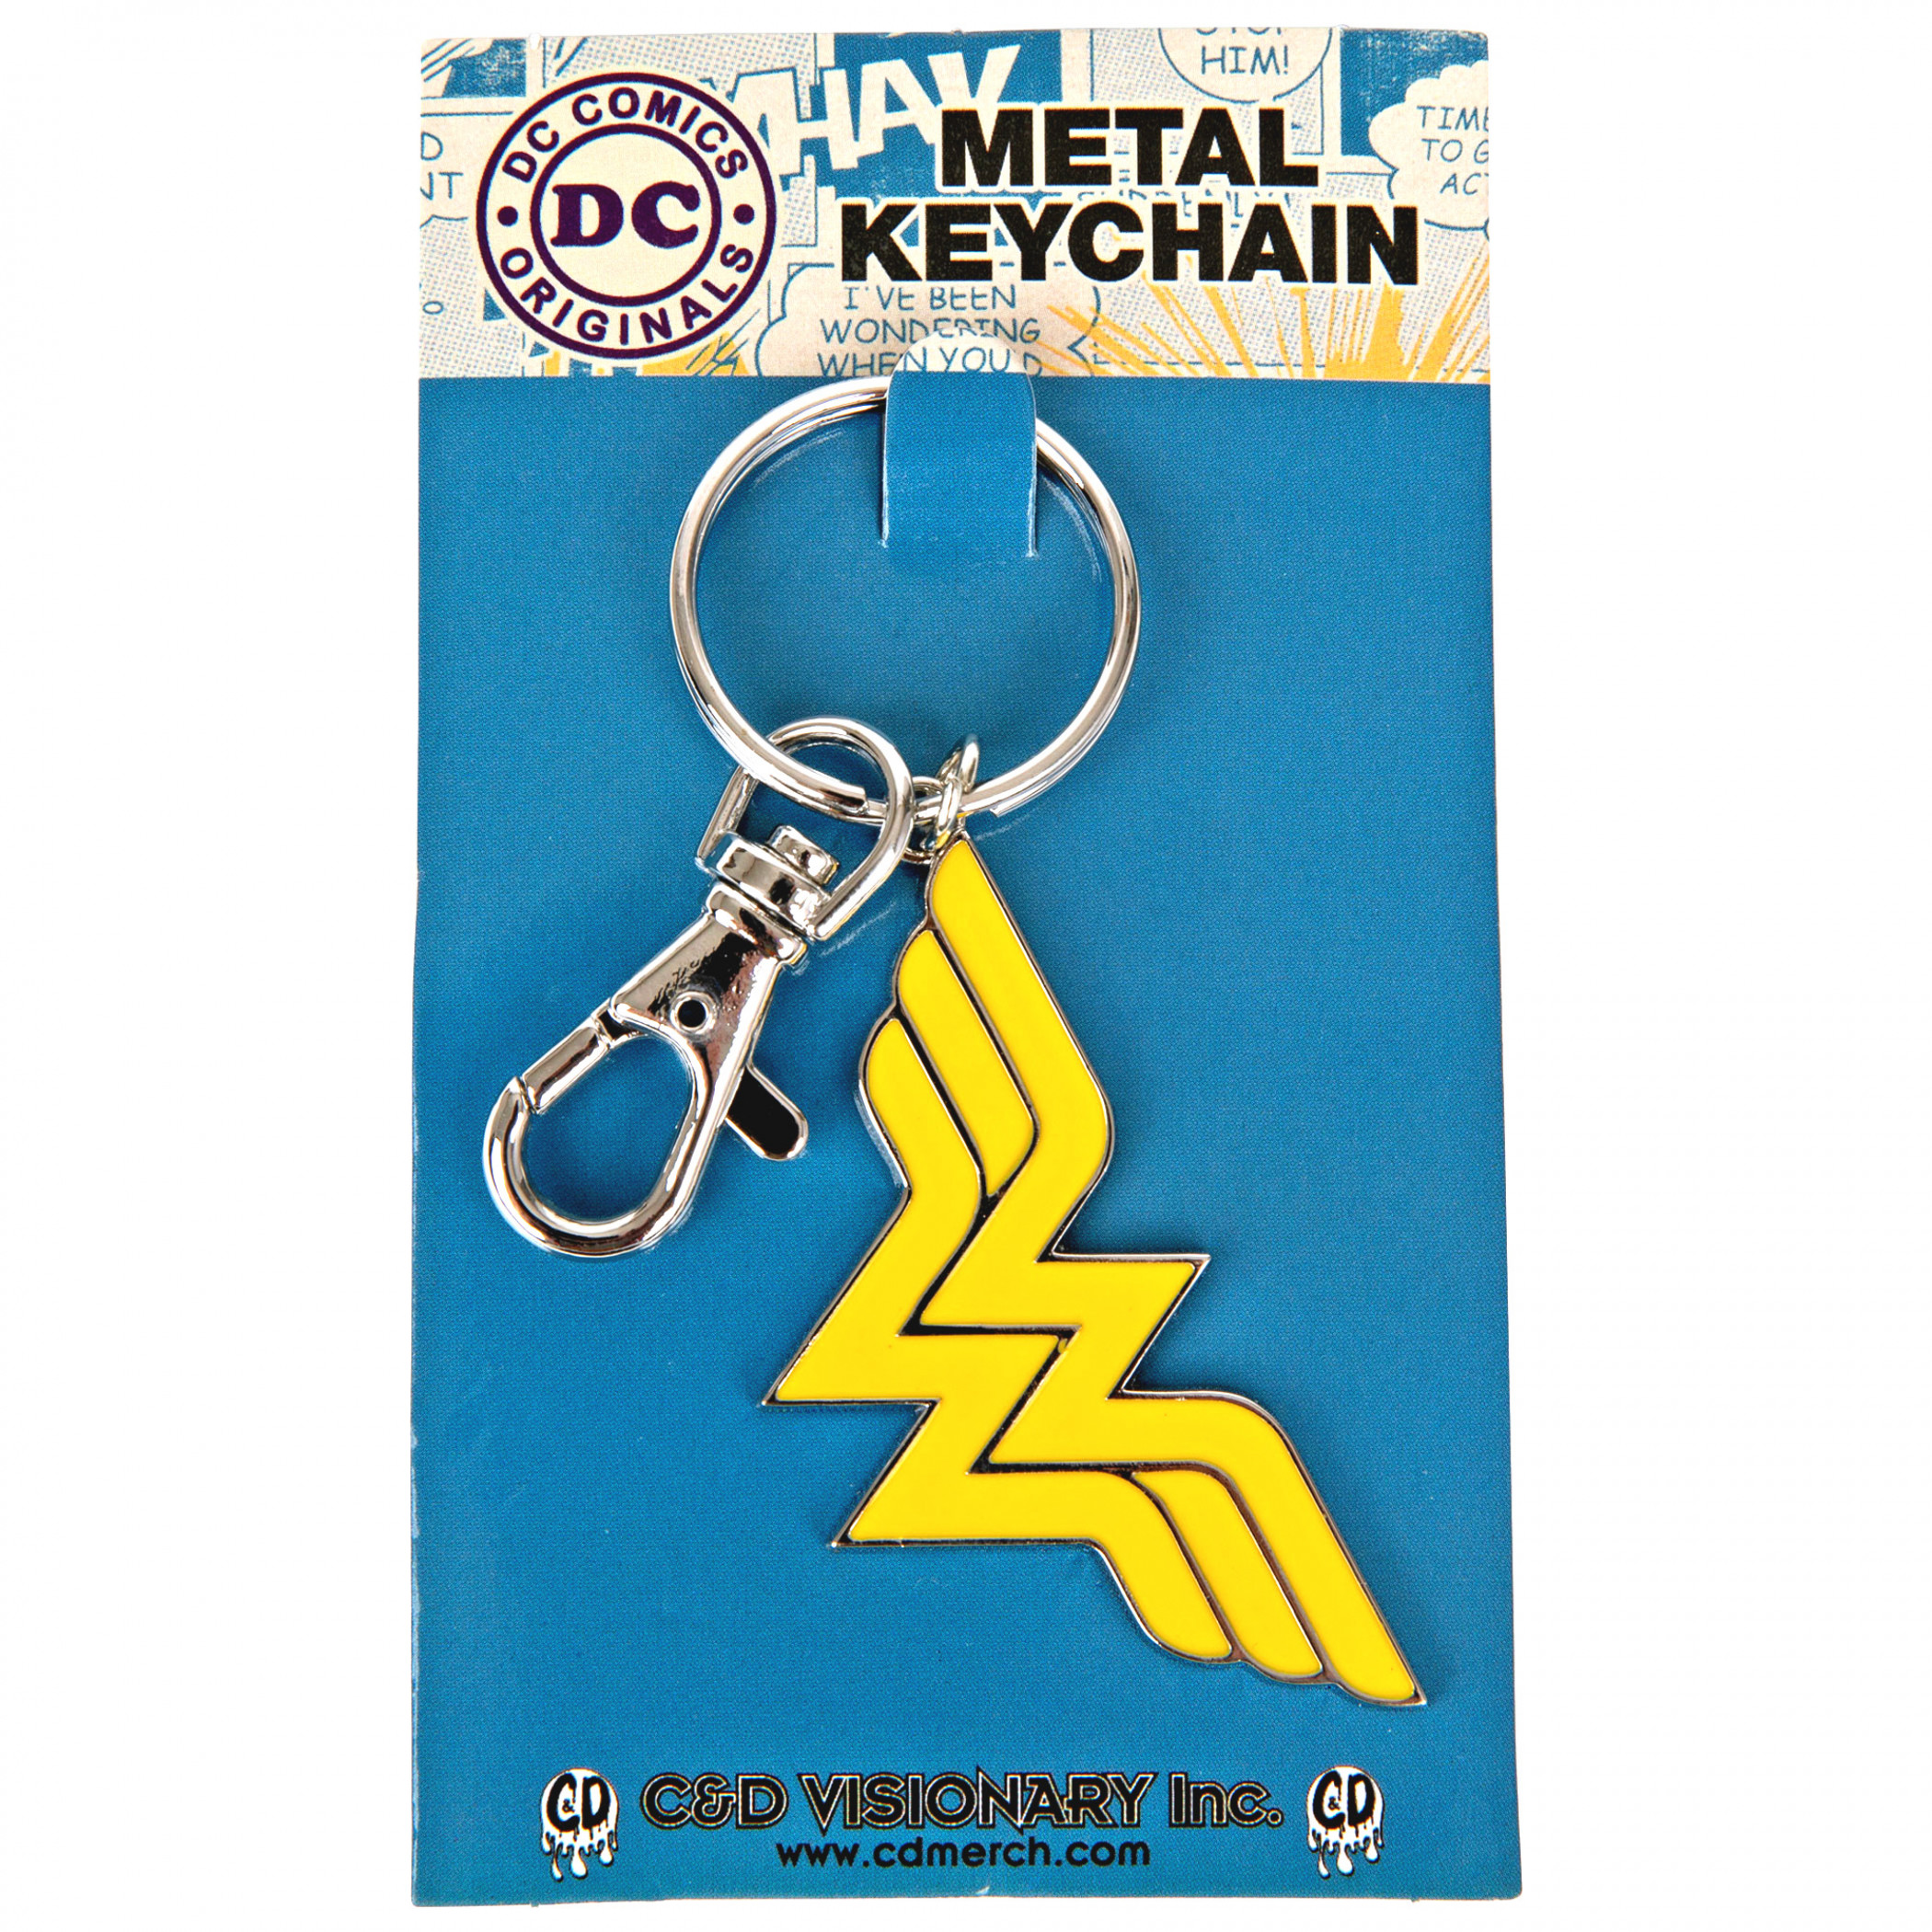 Wonder Woman Logo Metal Keychain